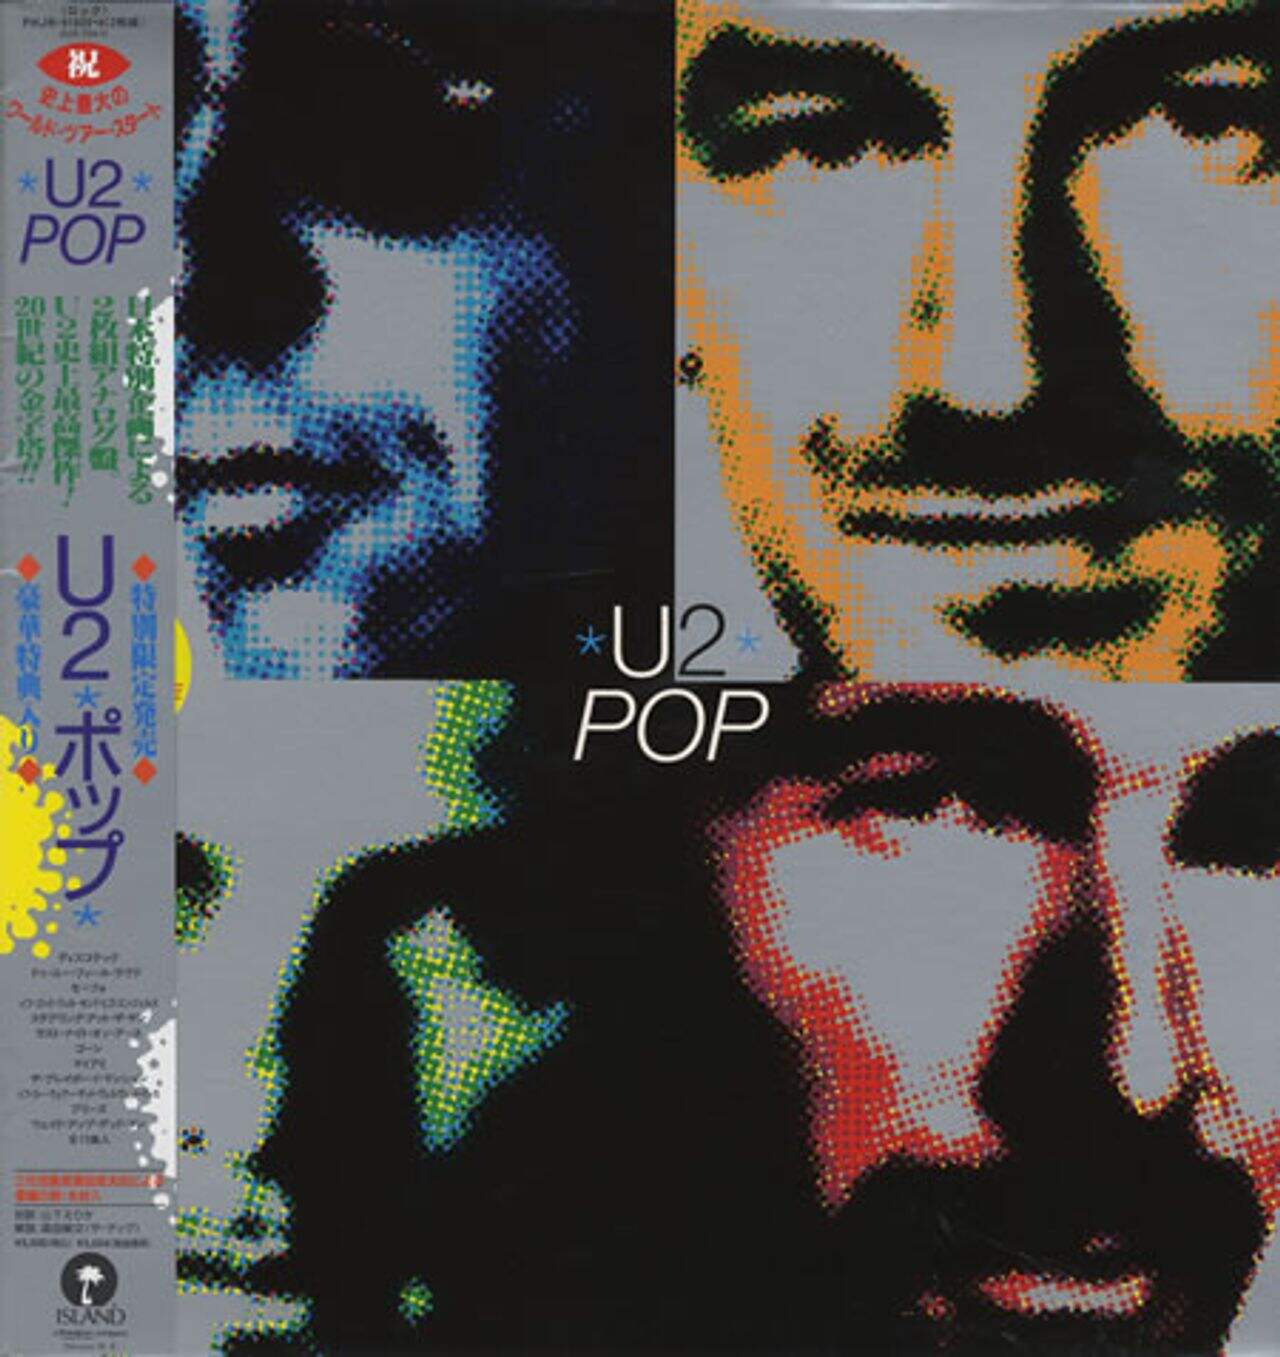 U2 Pop Japanese 2-LP vinyl set